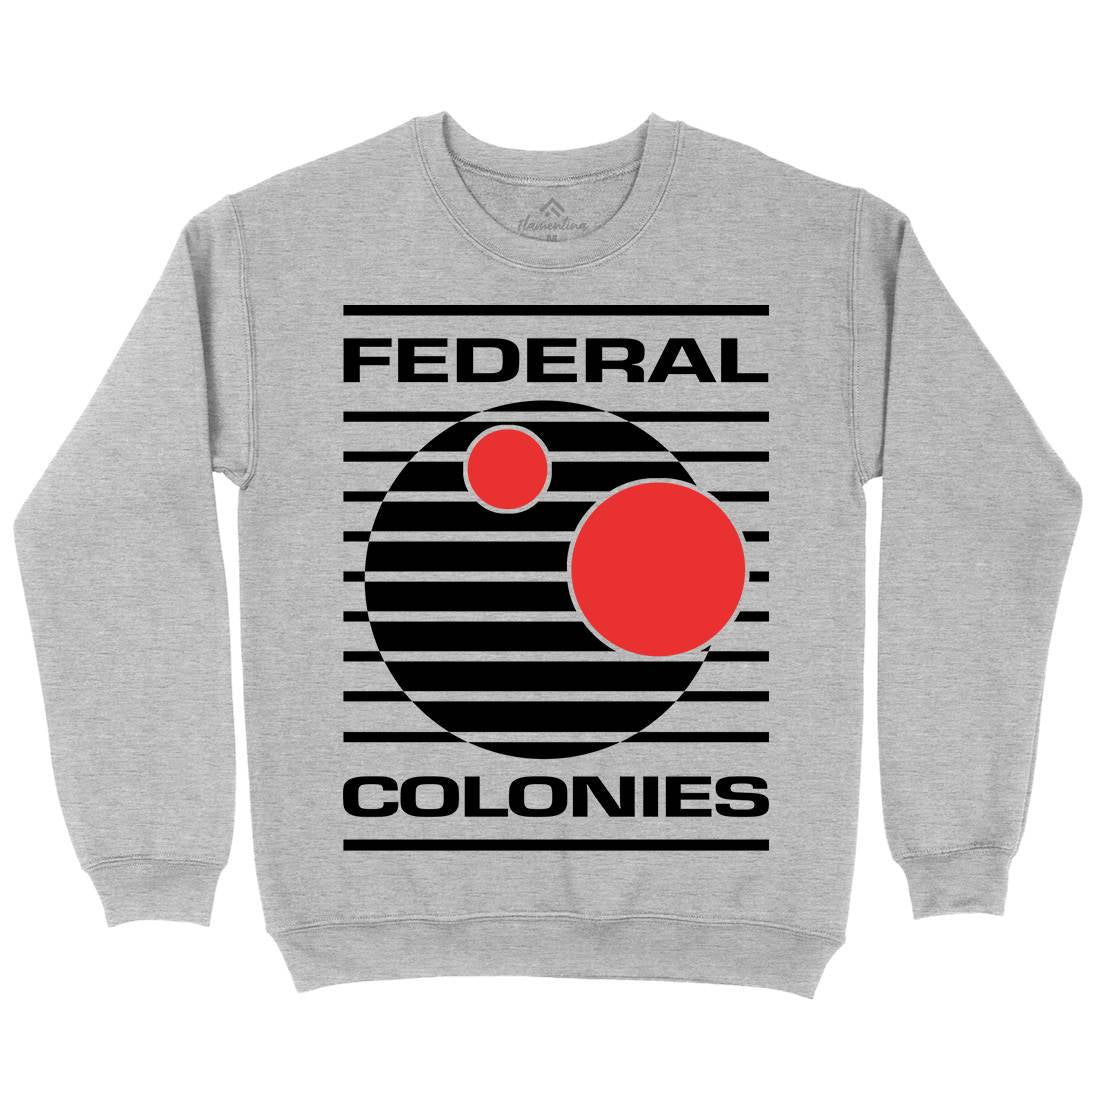 Federal Colonies Kids Crew Neck Sweatshirt Space D409